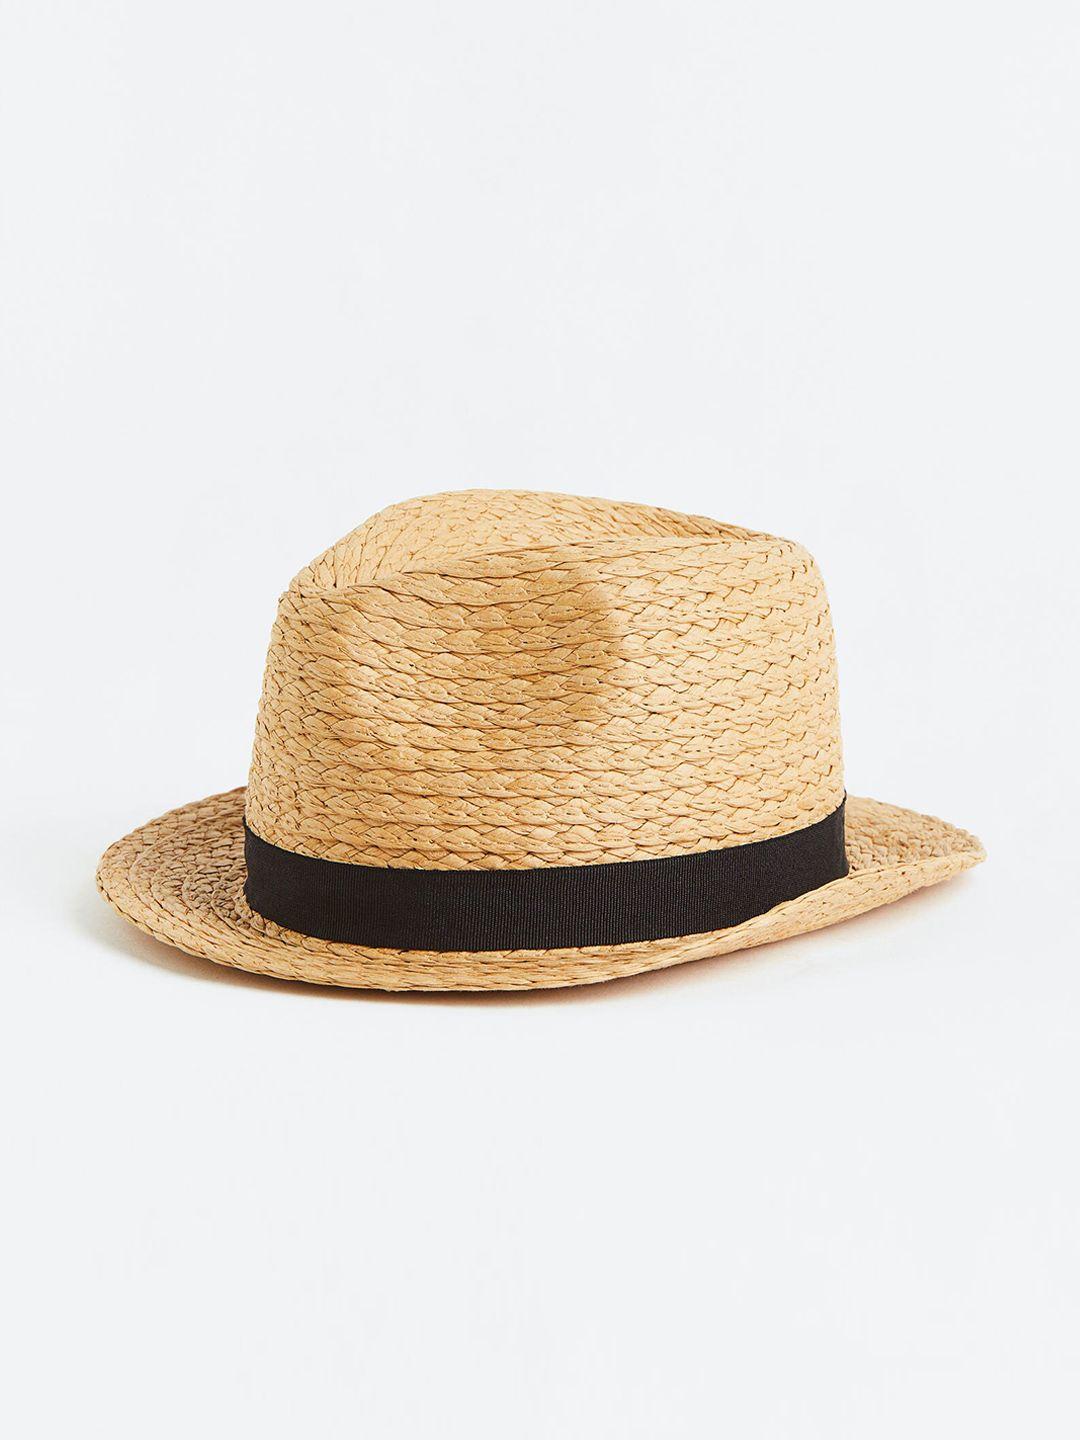 h&m-boys-straw-hat